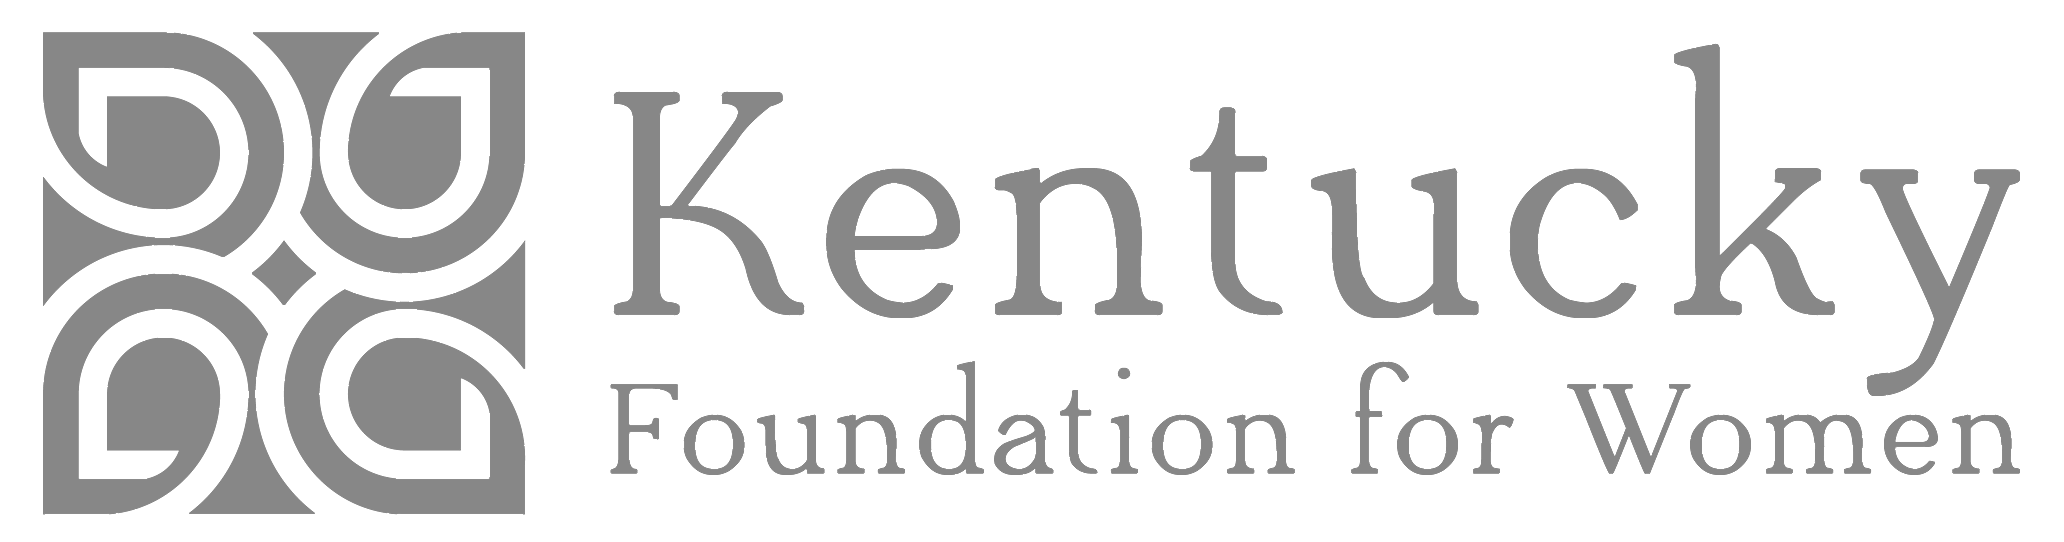 Kentucky Foundation for Women logo